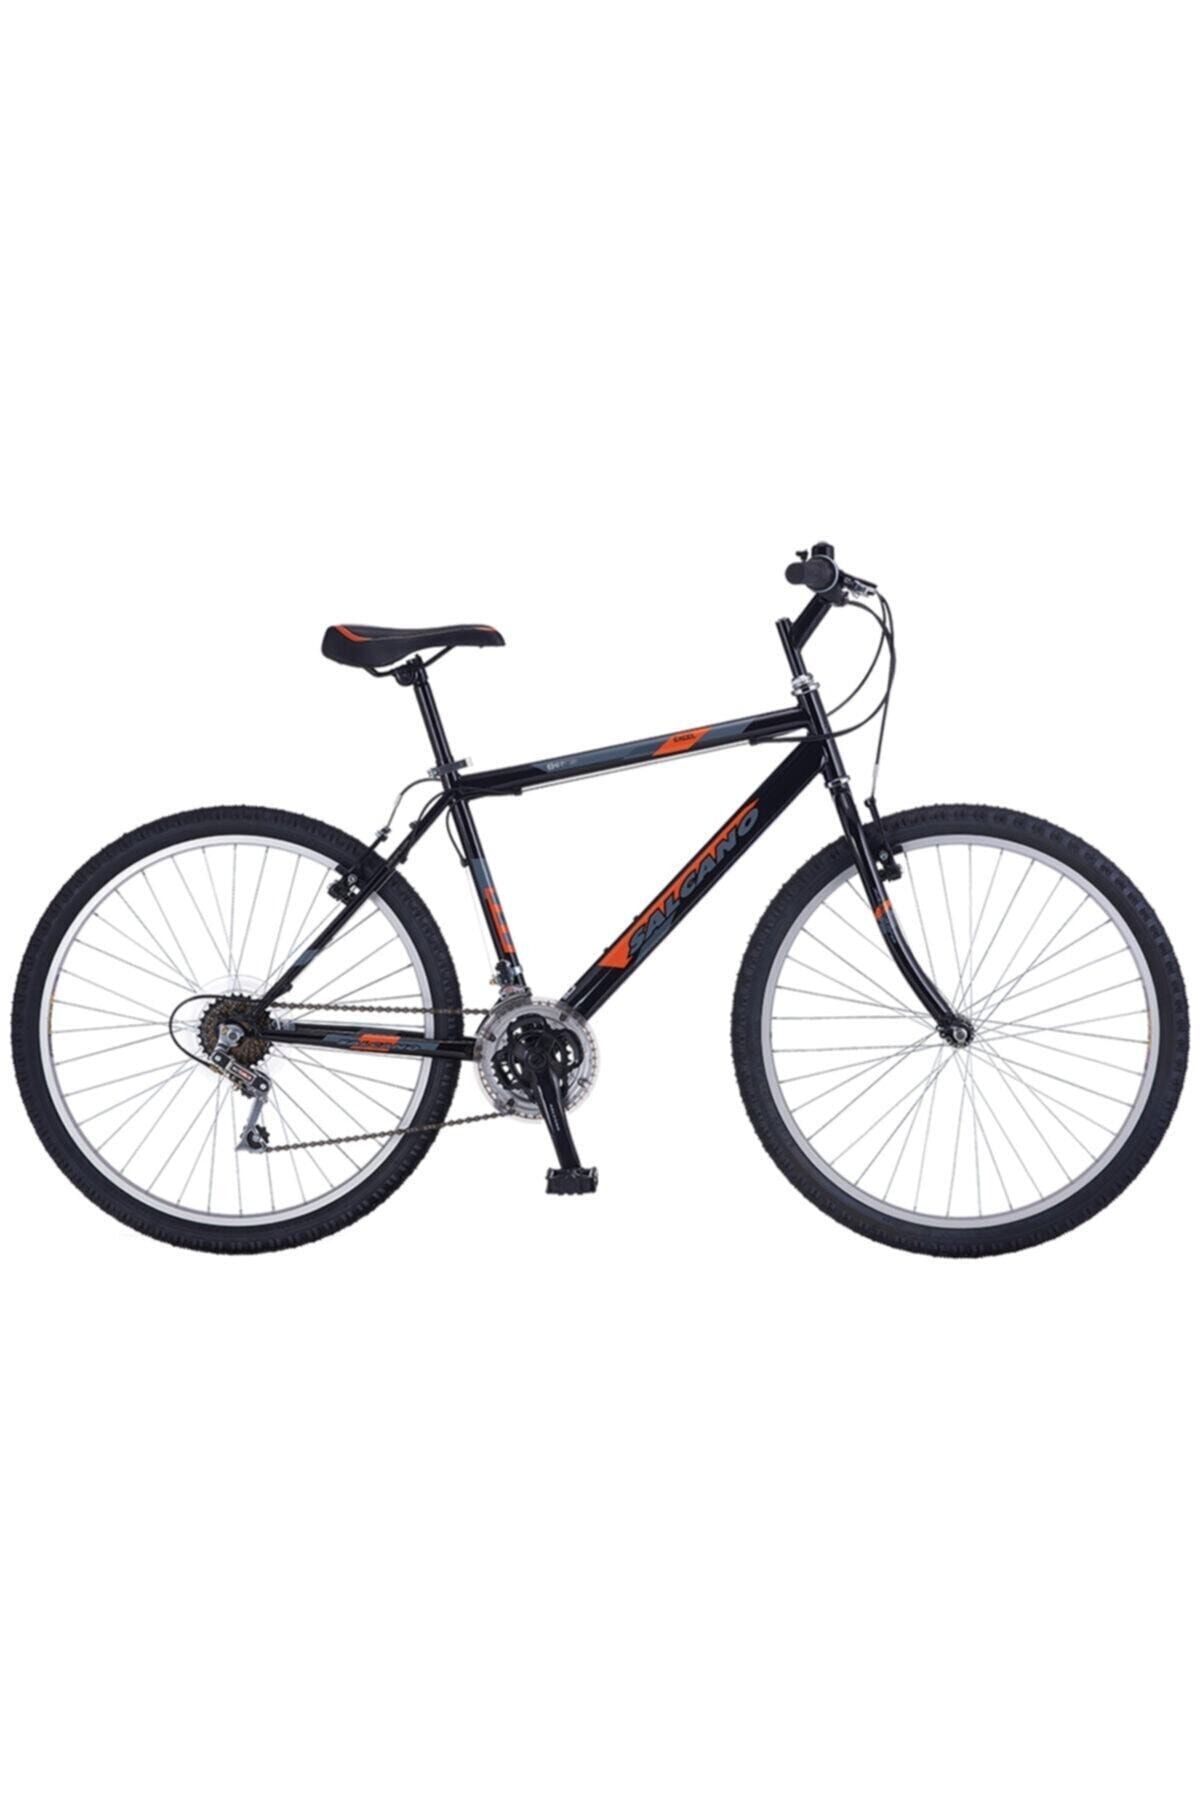 Salcano Excel 26 Jant (155-170 Cm Boy) Dağ Bisikleti - Siyah Turuncu Koyu Gri